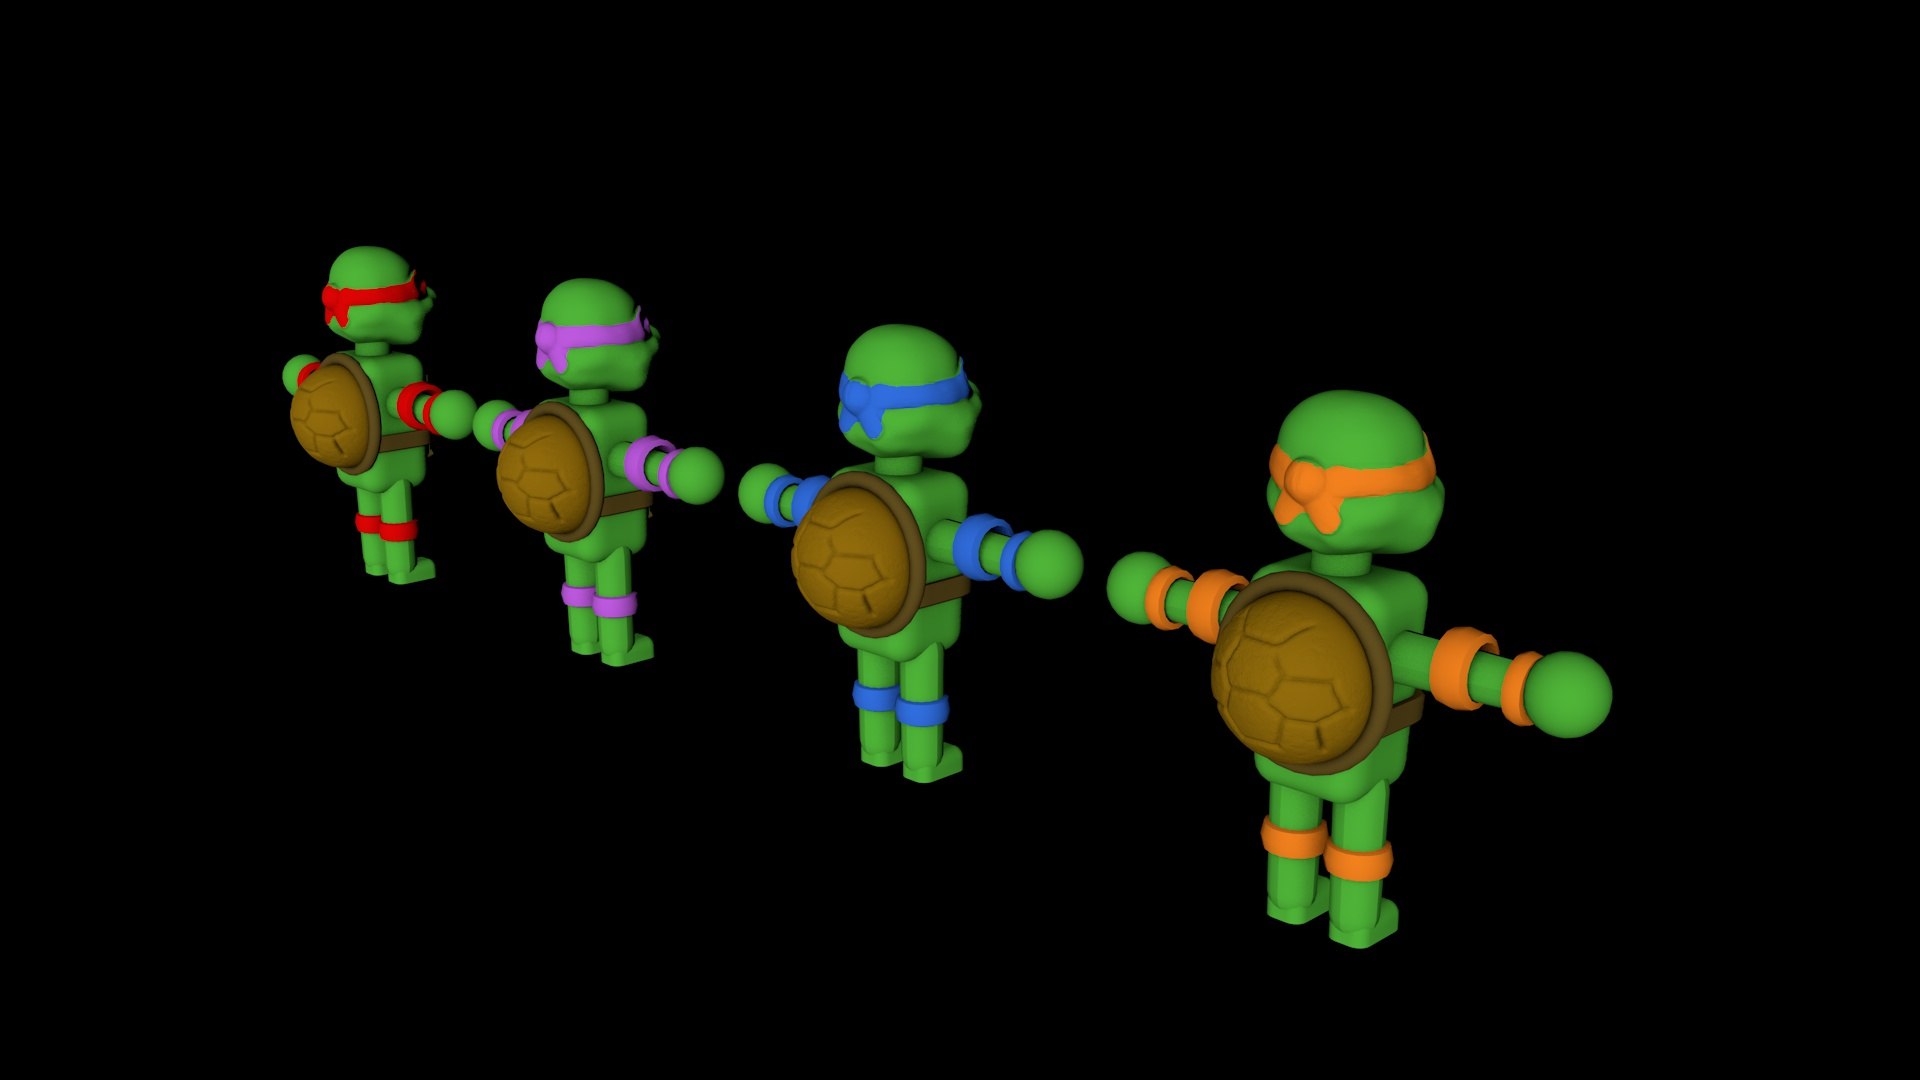 Teenage Mutant Ninja Turtles 3D Playscape £12.99 With FREE